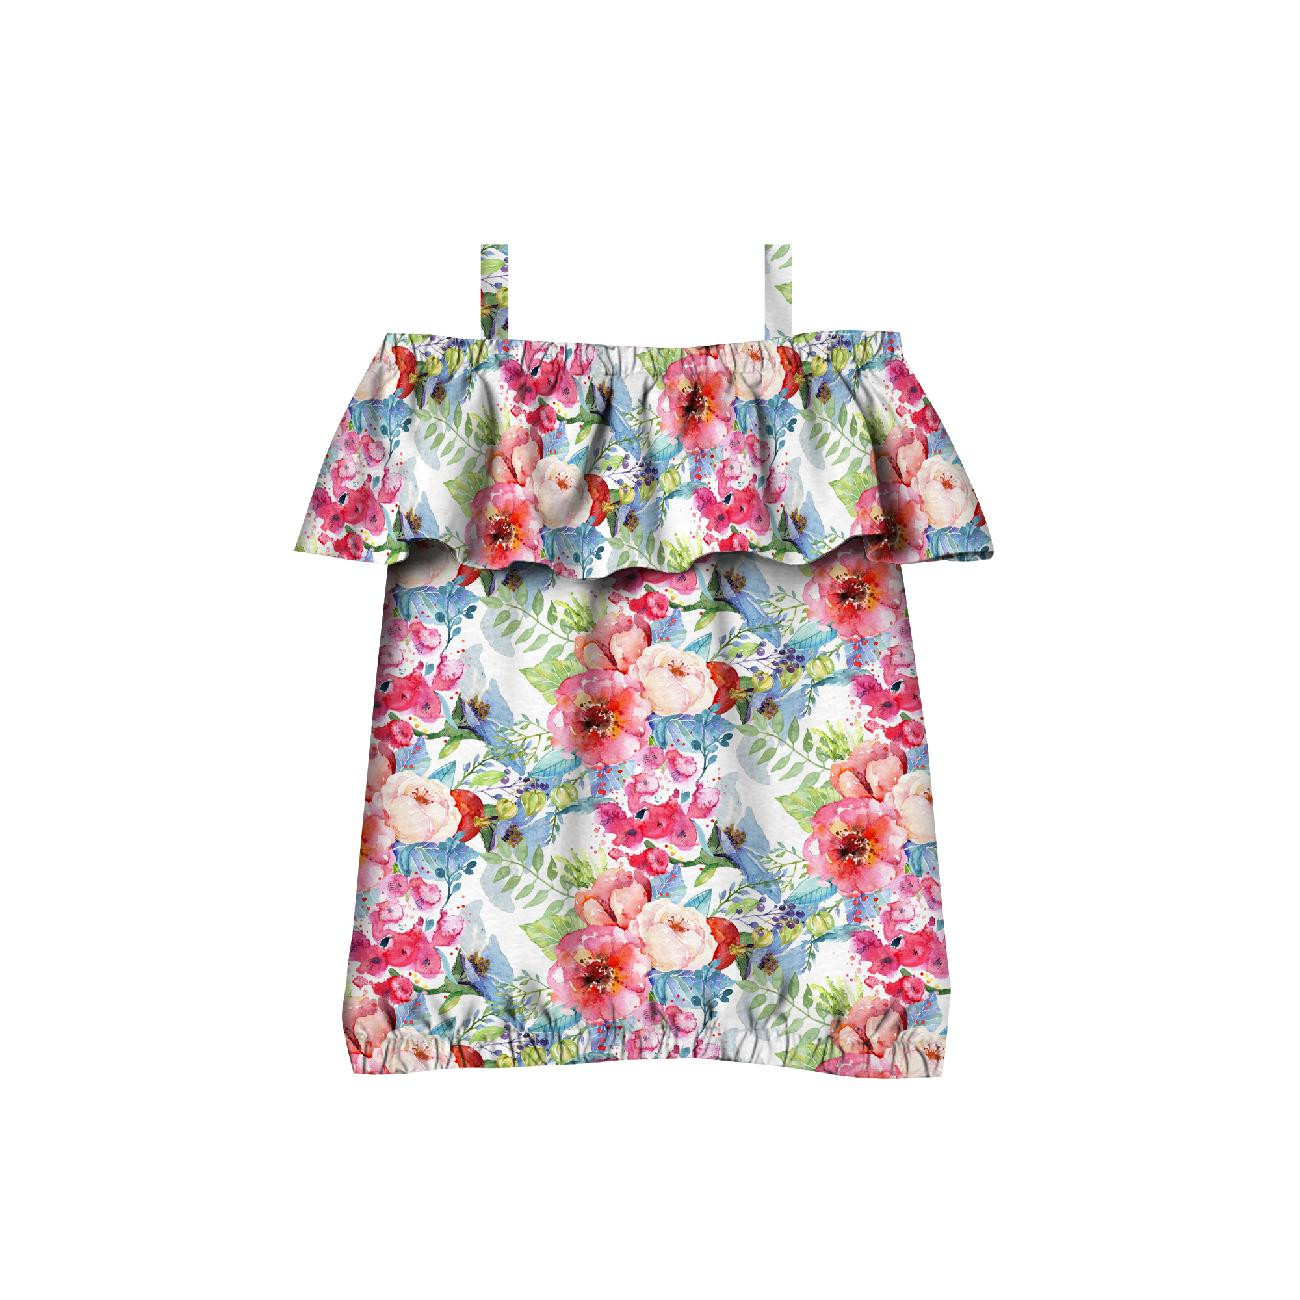 Bardot neckline blouse (SARA) - WILD ROSE PAT. 3 (IN THE MEADOW) - sewing set